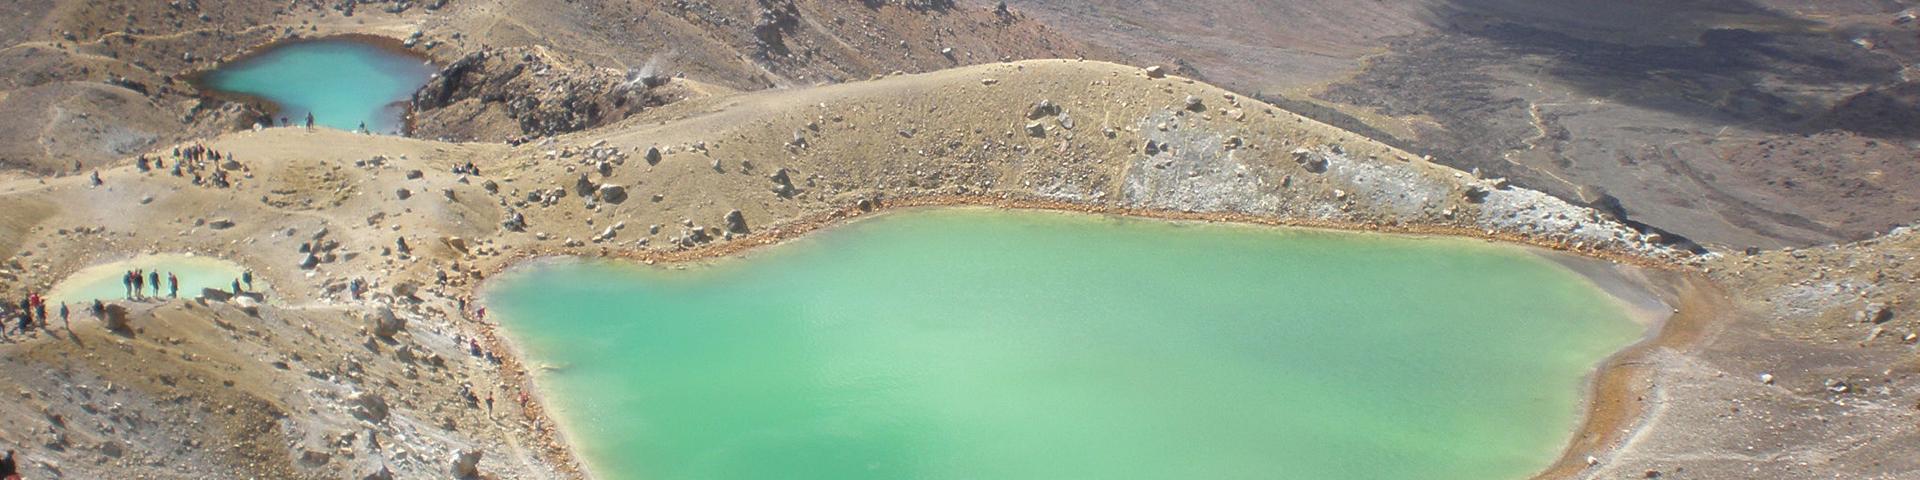 Coloured volcanic lakes, New-Zealand